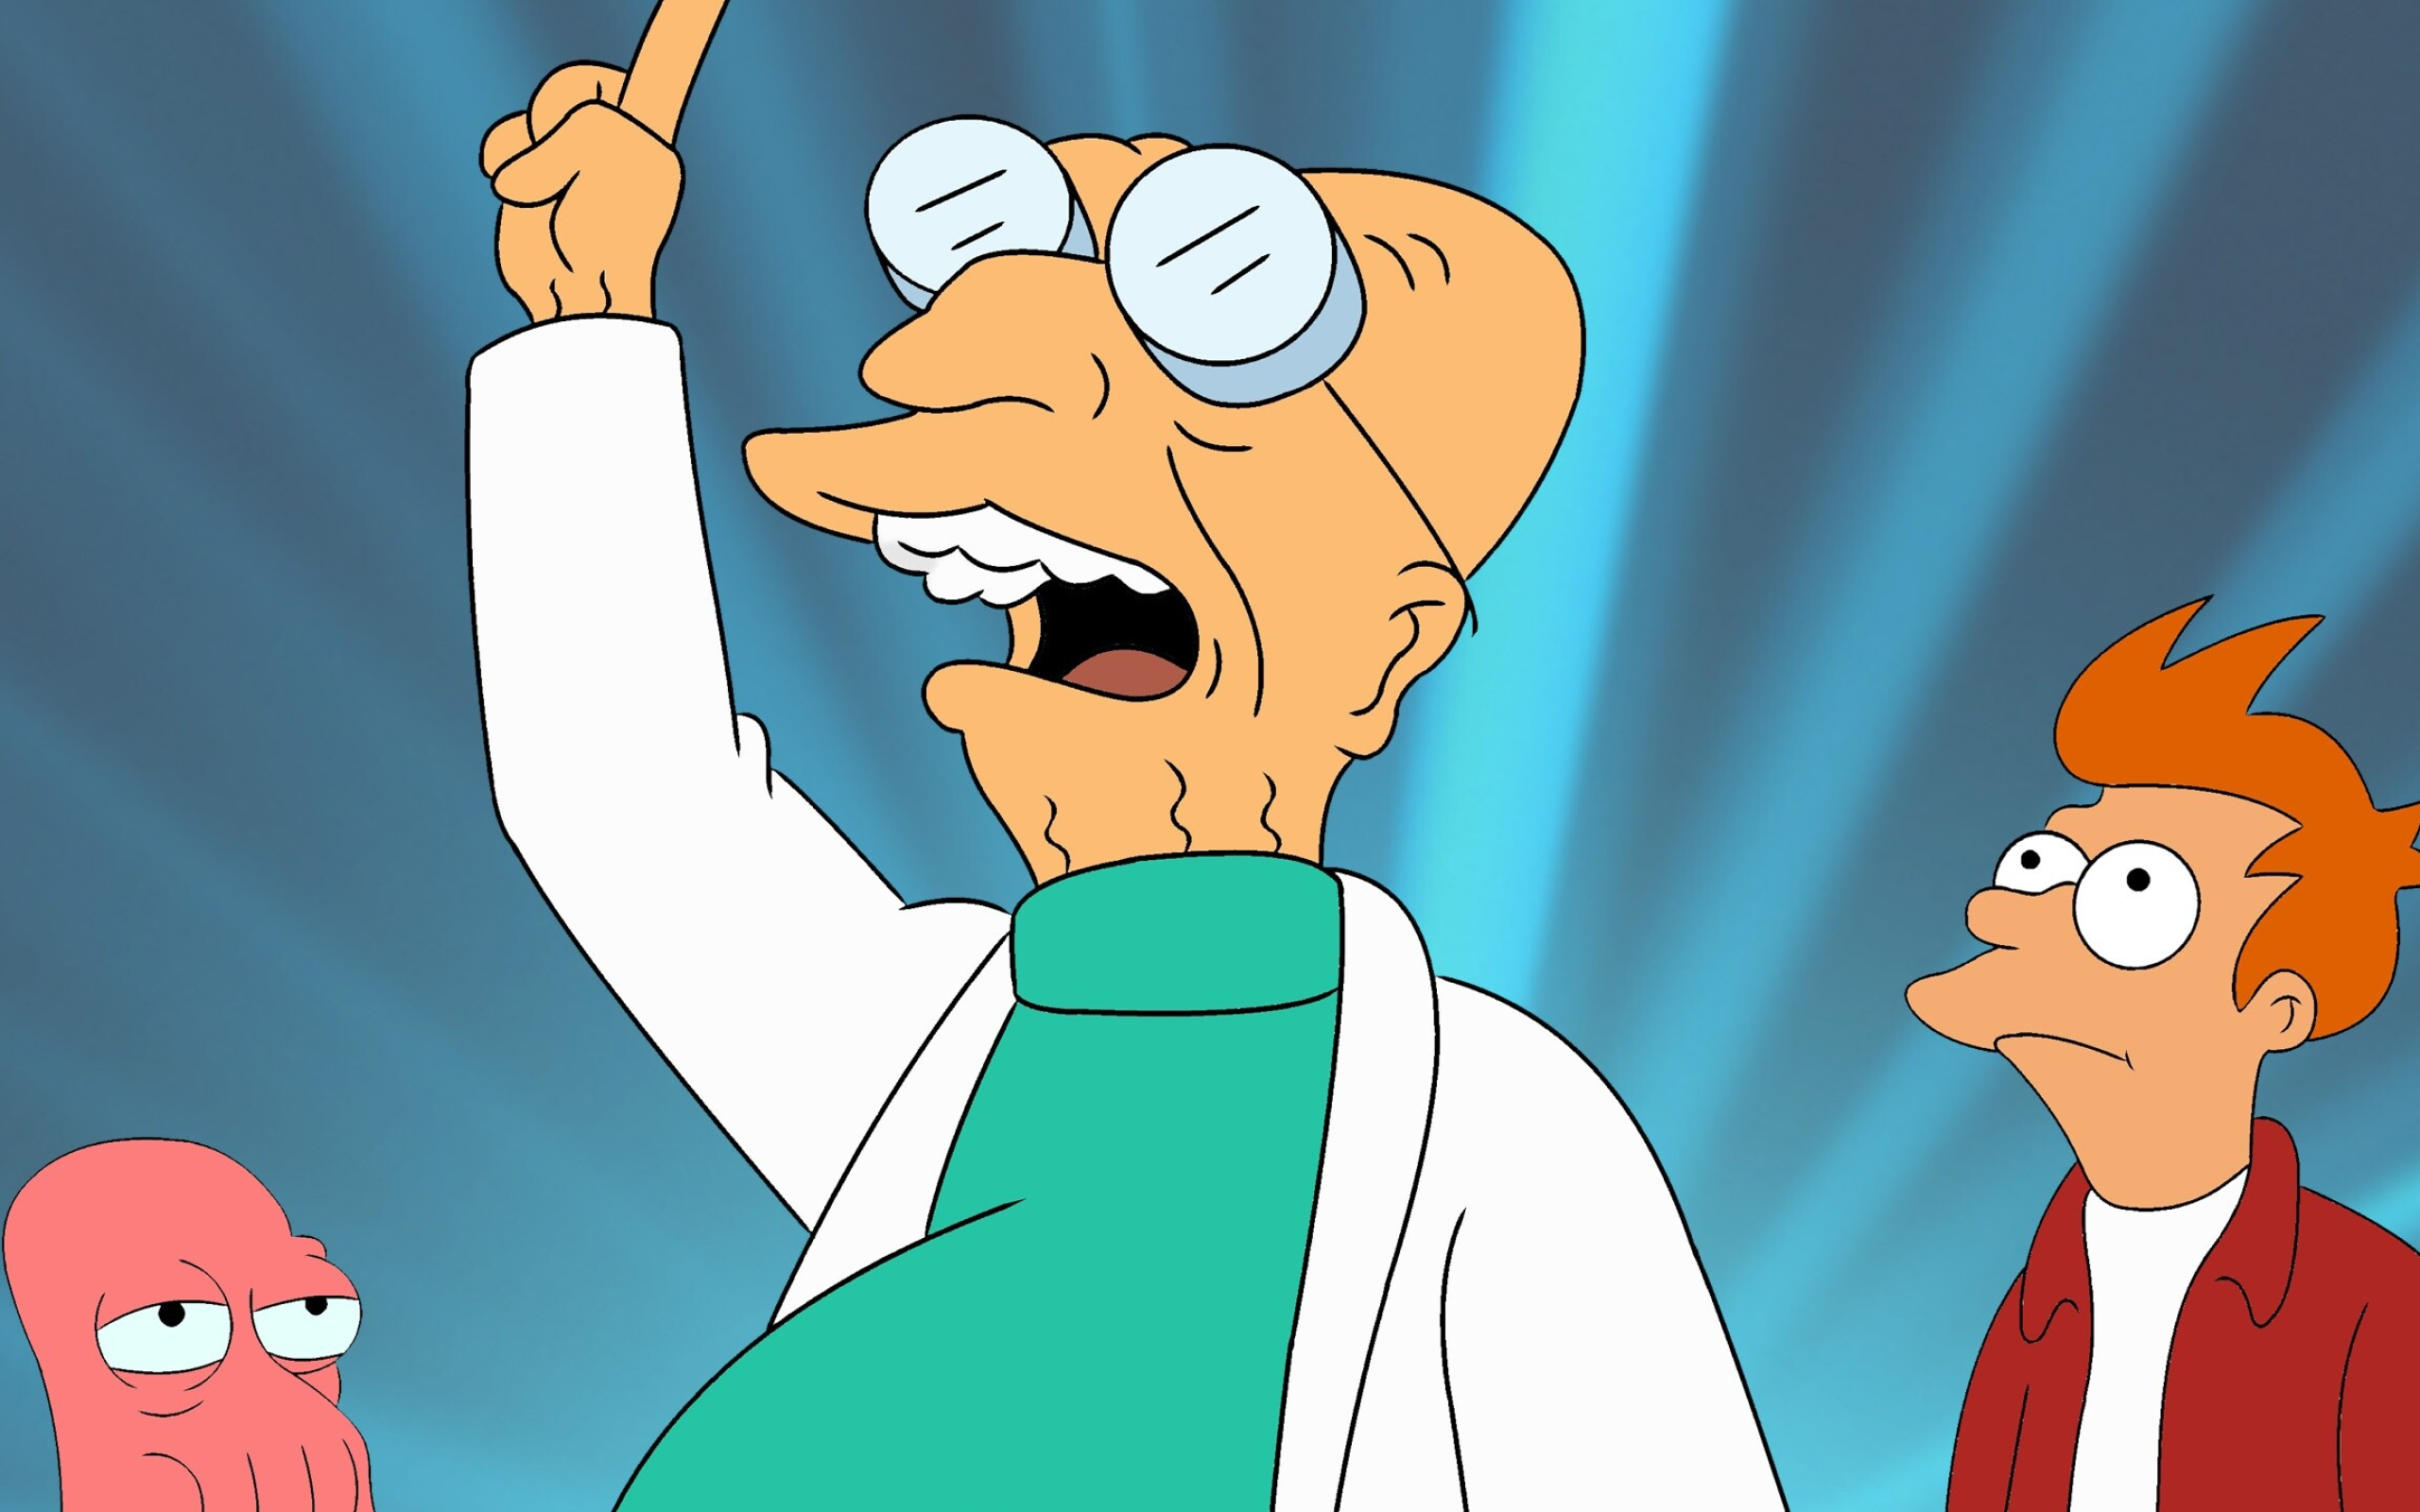 Futurama: An American adult animated science fiction sitcom series, Professor Farnsworth. 2560x1600 HD Wallpaper.